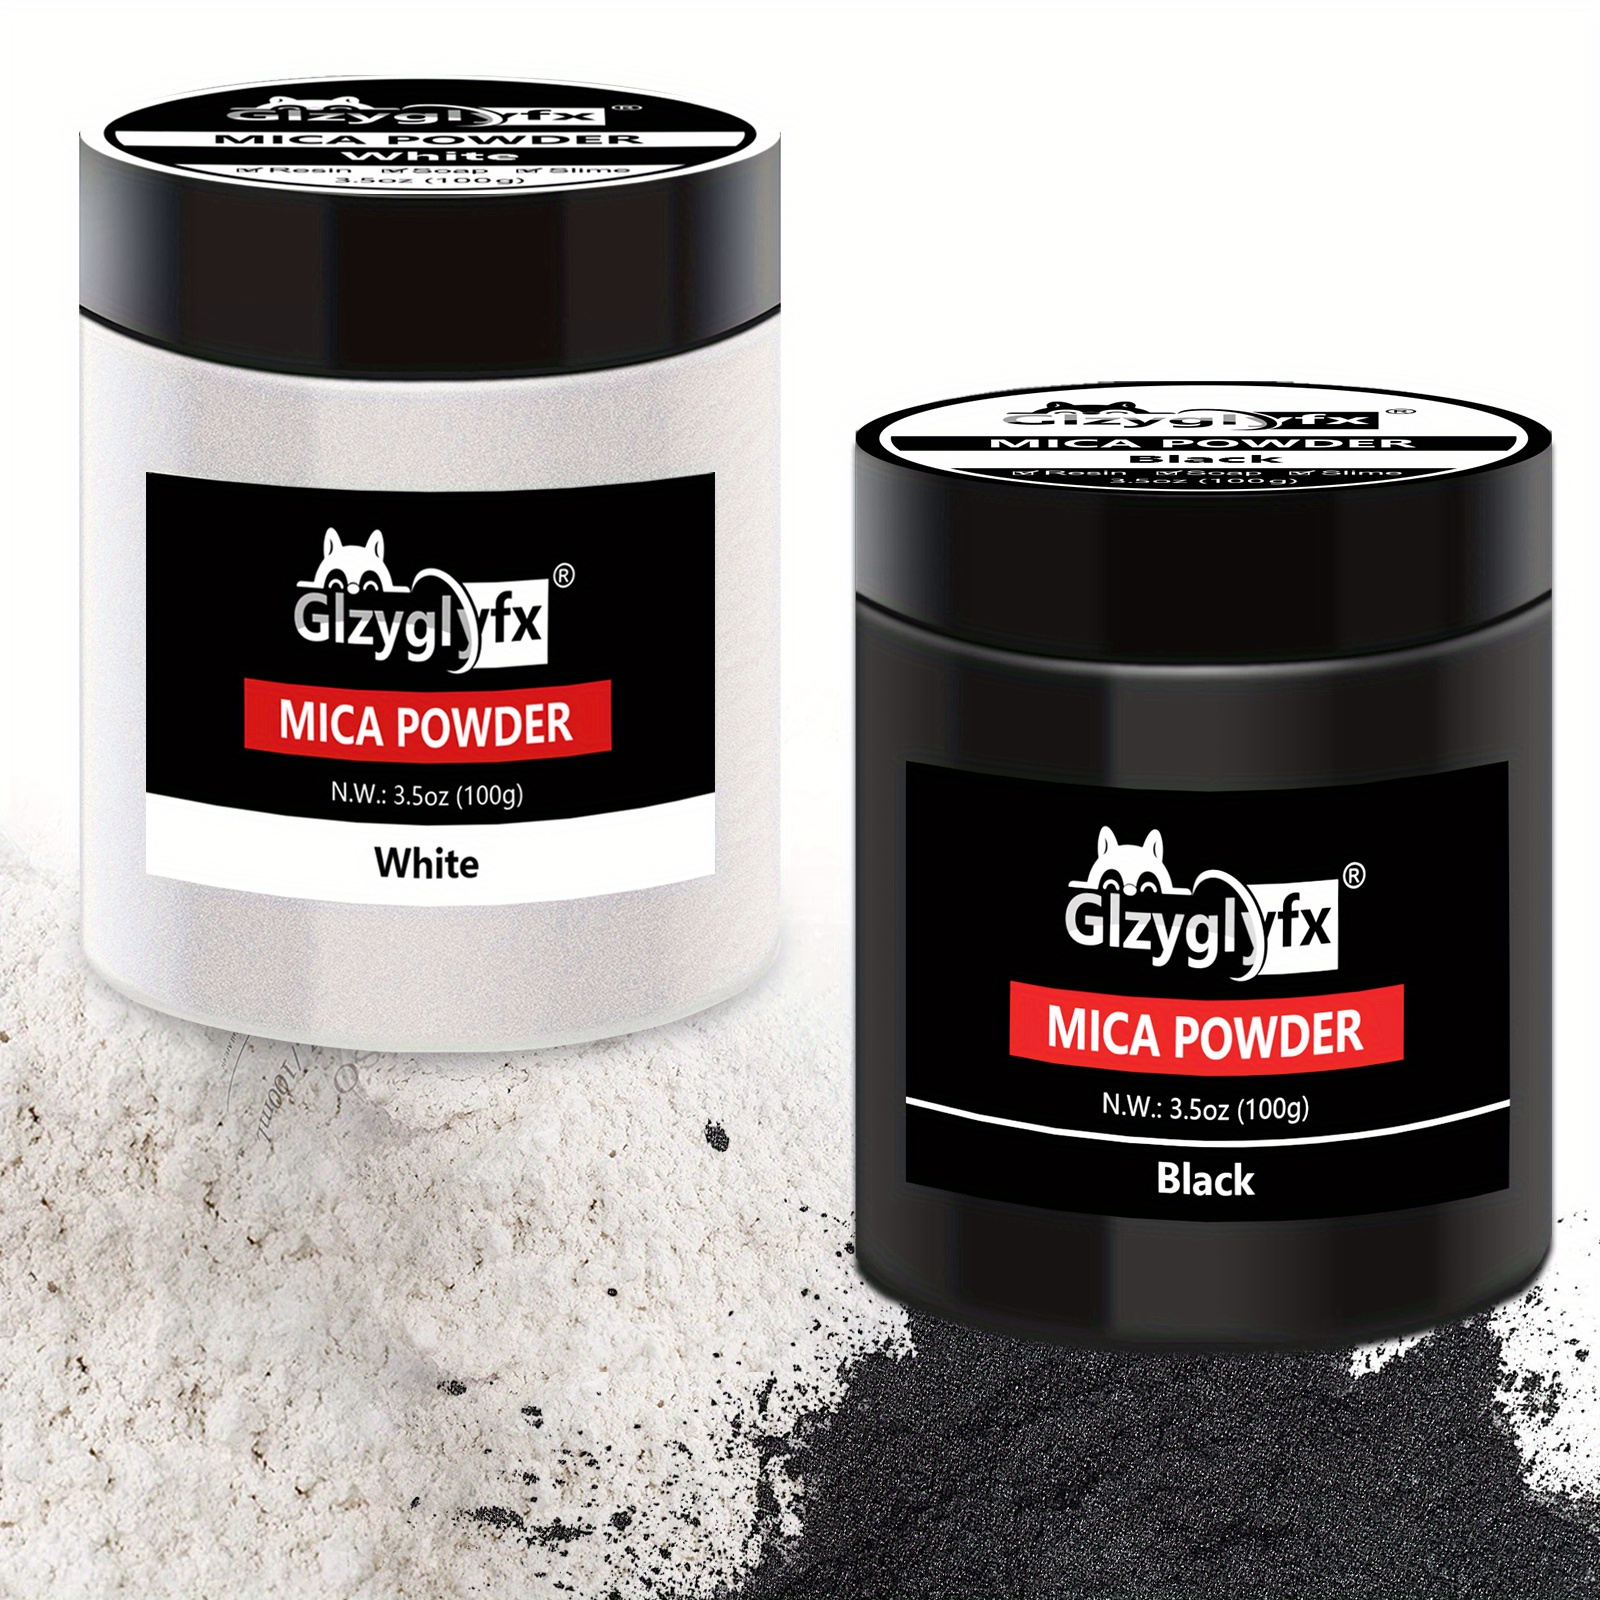 White And Black Mica Powder /jar For Epoxy Resin, Pigment Powder - Resin Mica  Powder For Candle Making, Resin Powder - Pigment Powder For Epoxy Resin,  Mica Powder For Resin Pigment Powder 